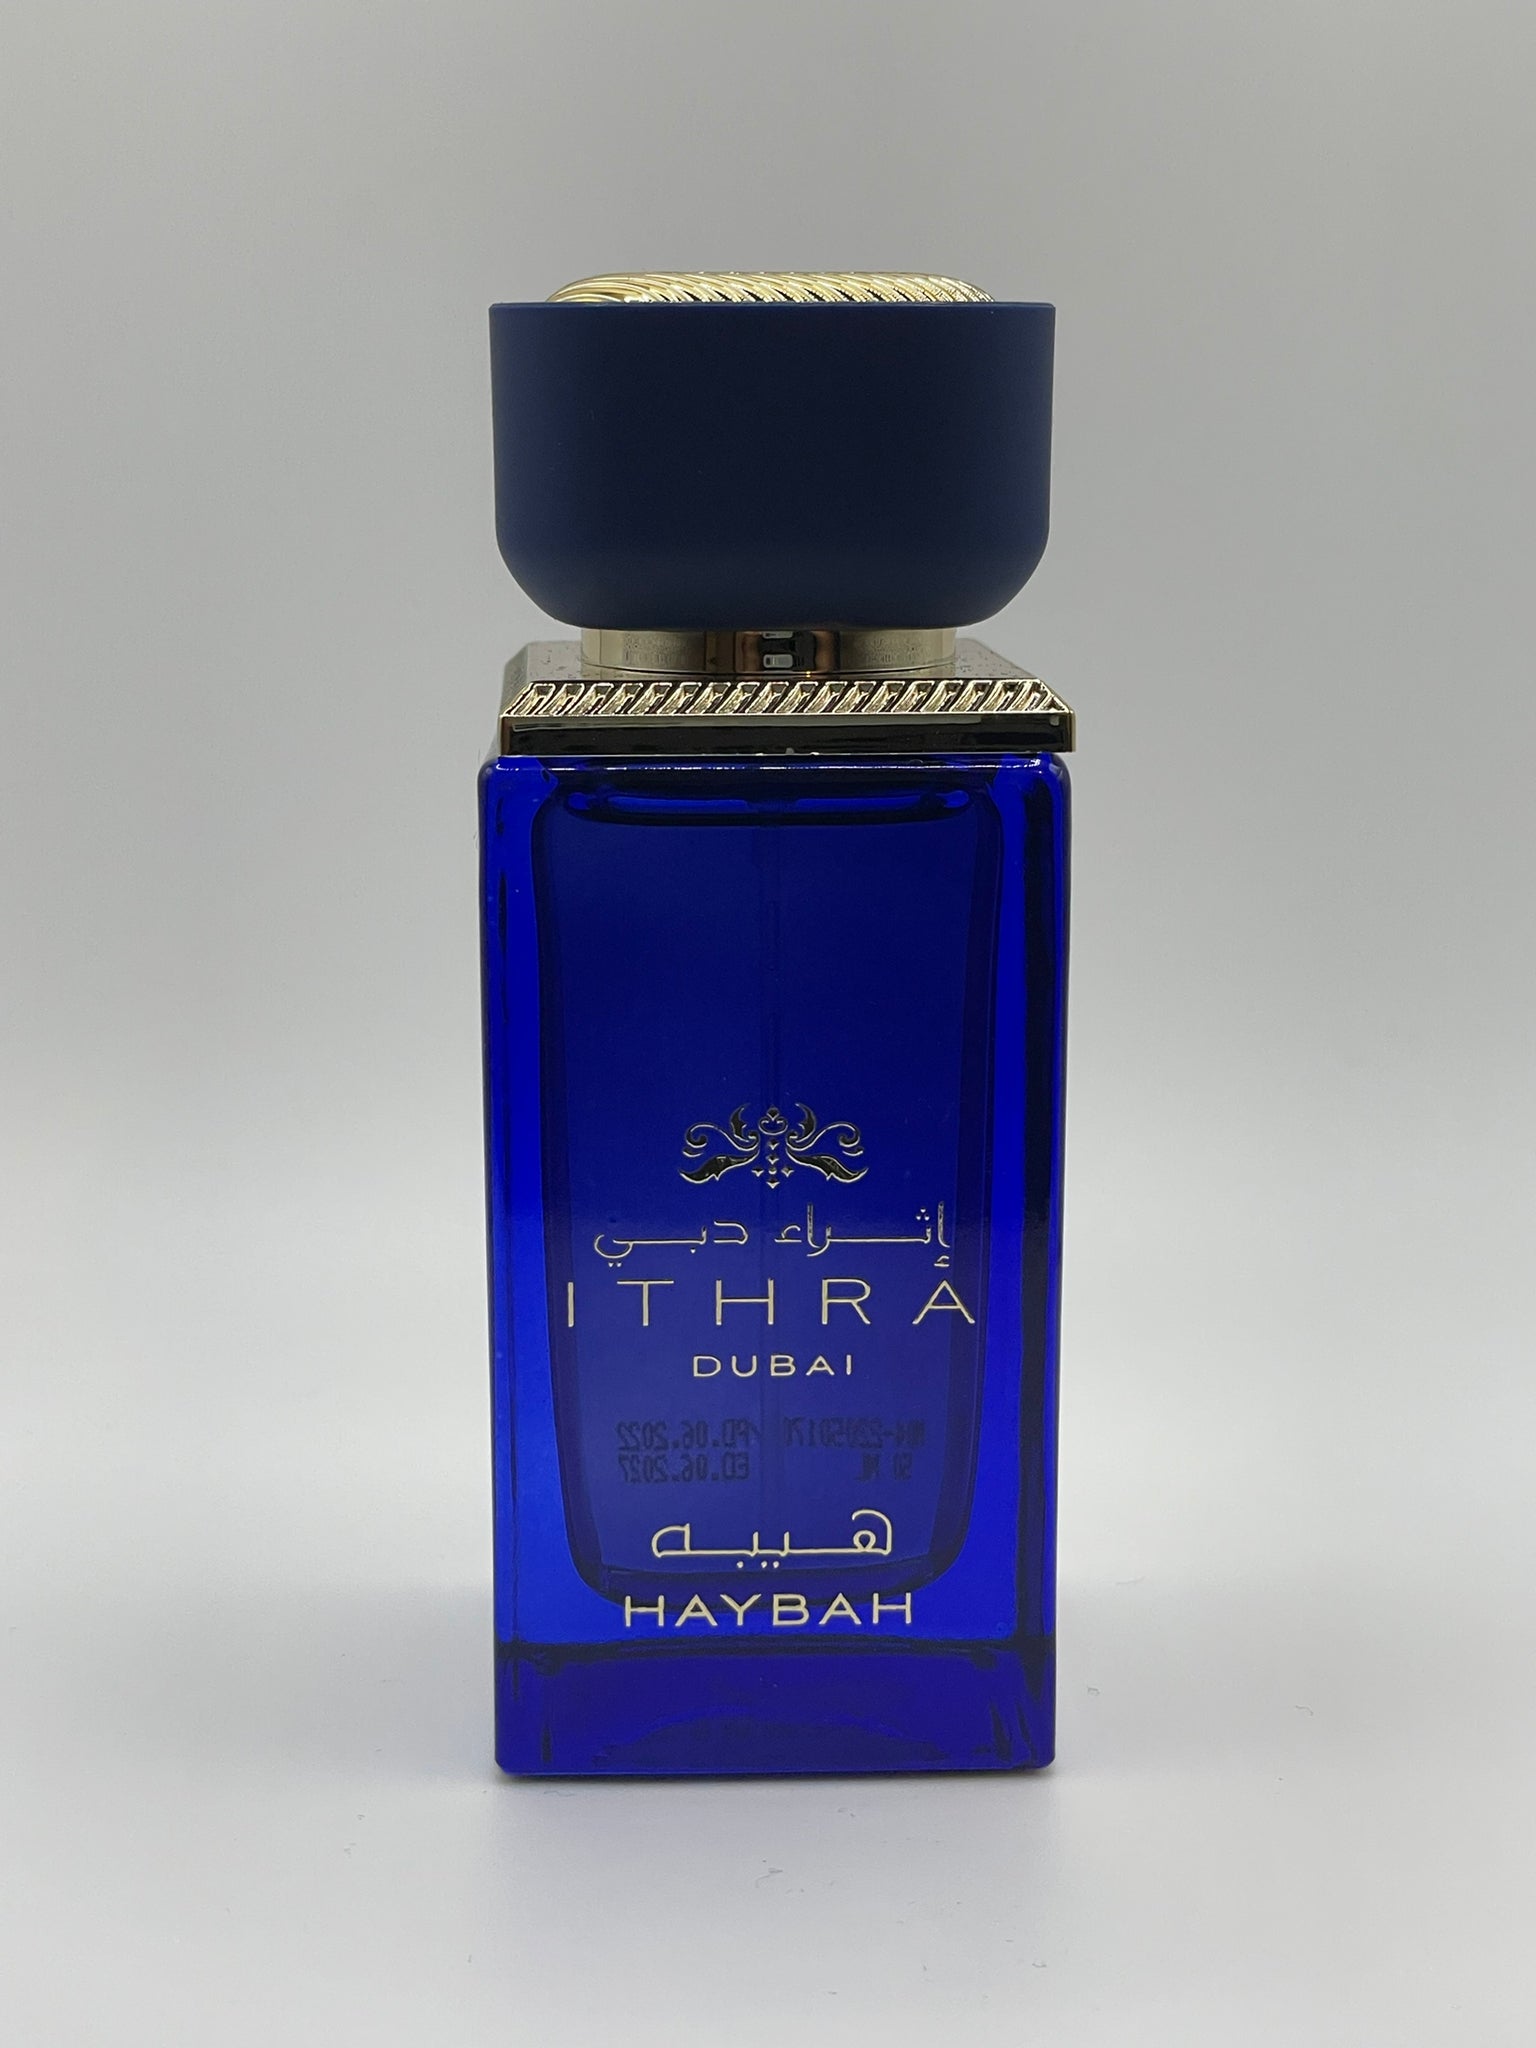 ITHRA HAYBAH